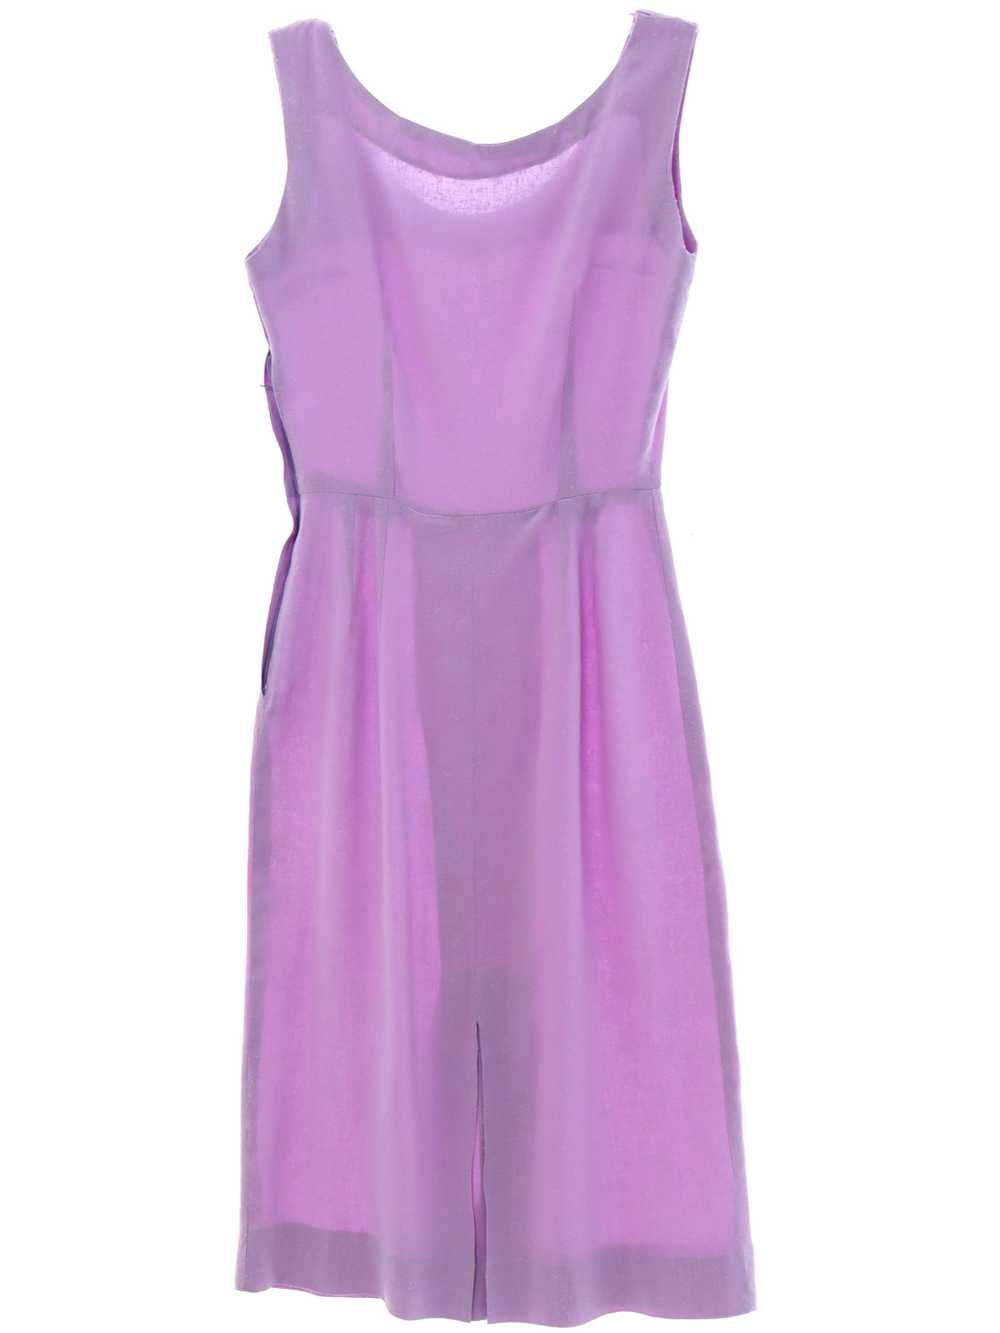 1960's Mod Linen Dress - image 3